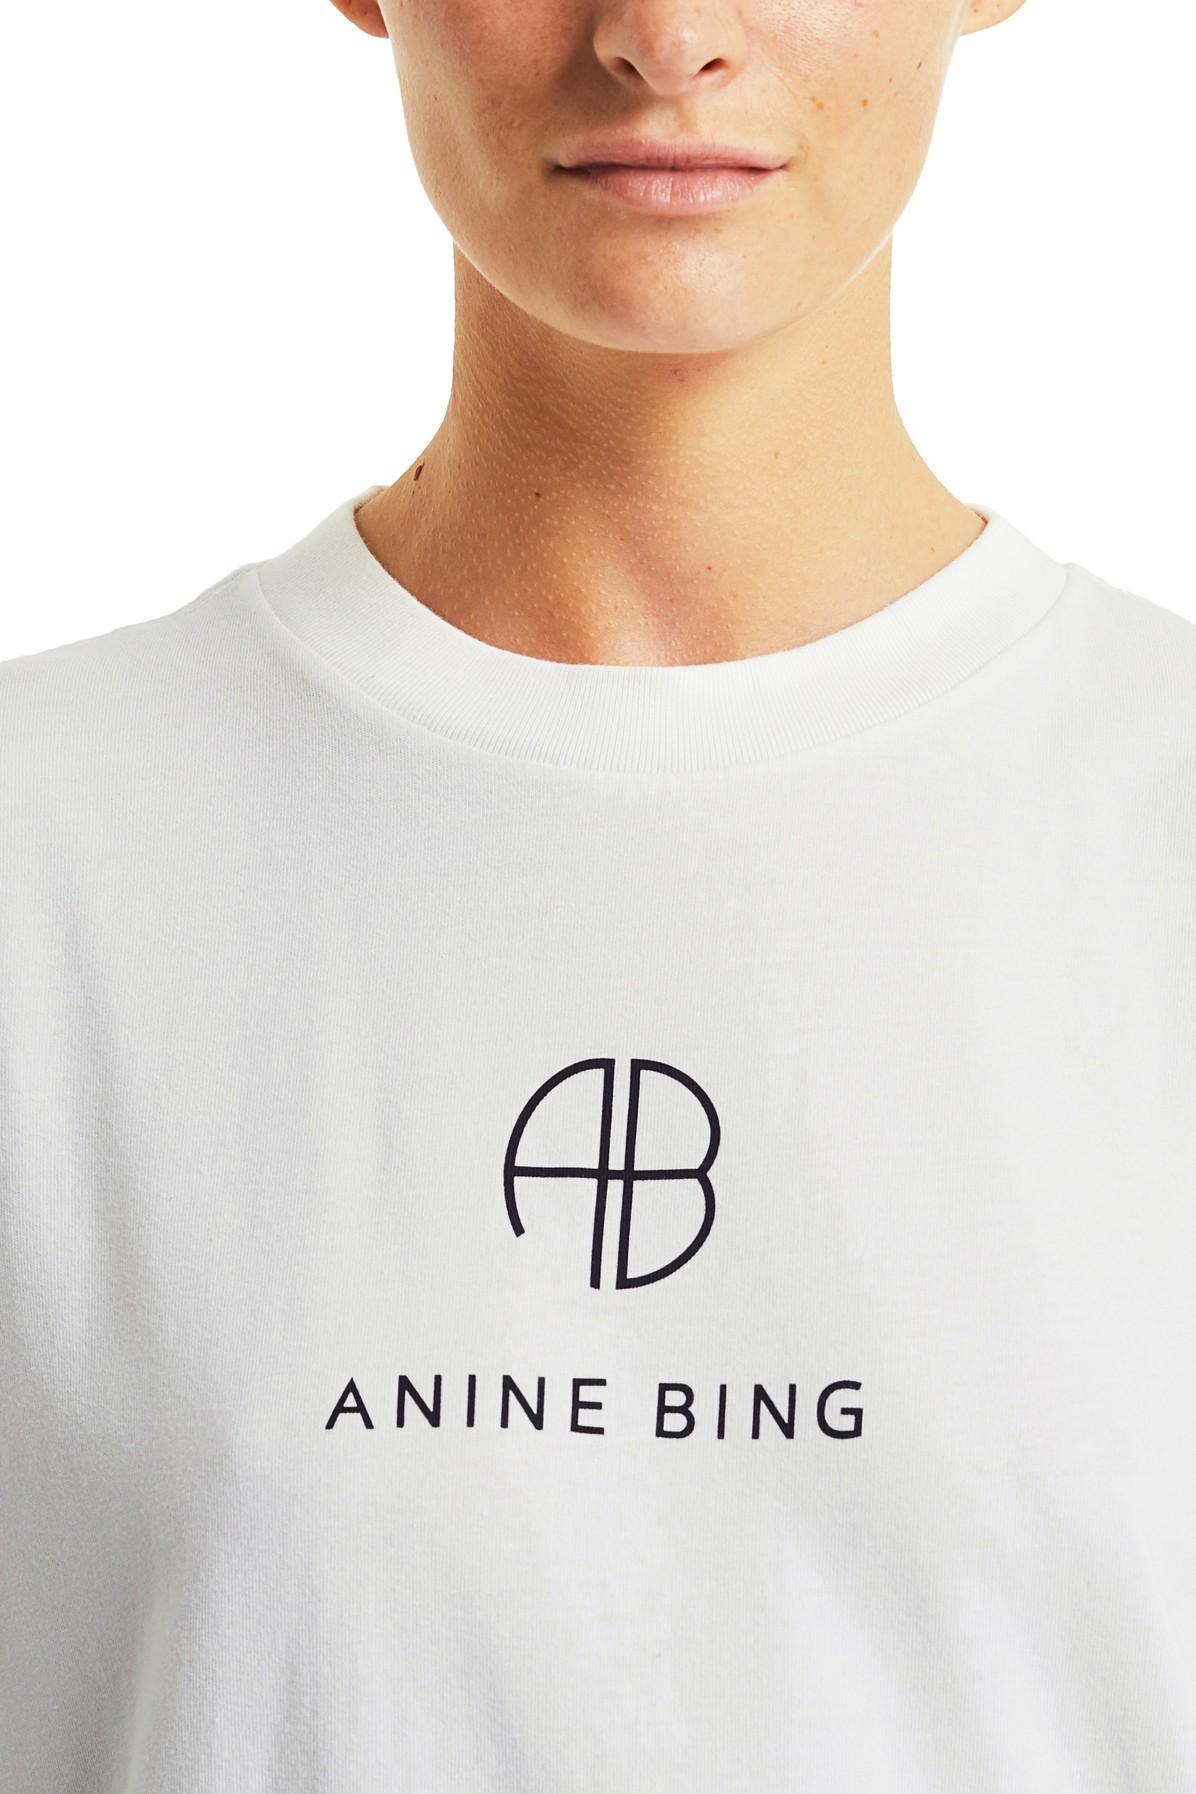 Anine Bing Hudson T-shirt in White | Lyst